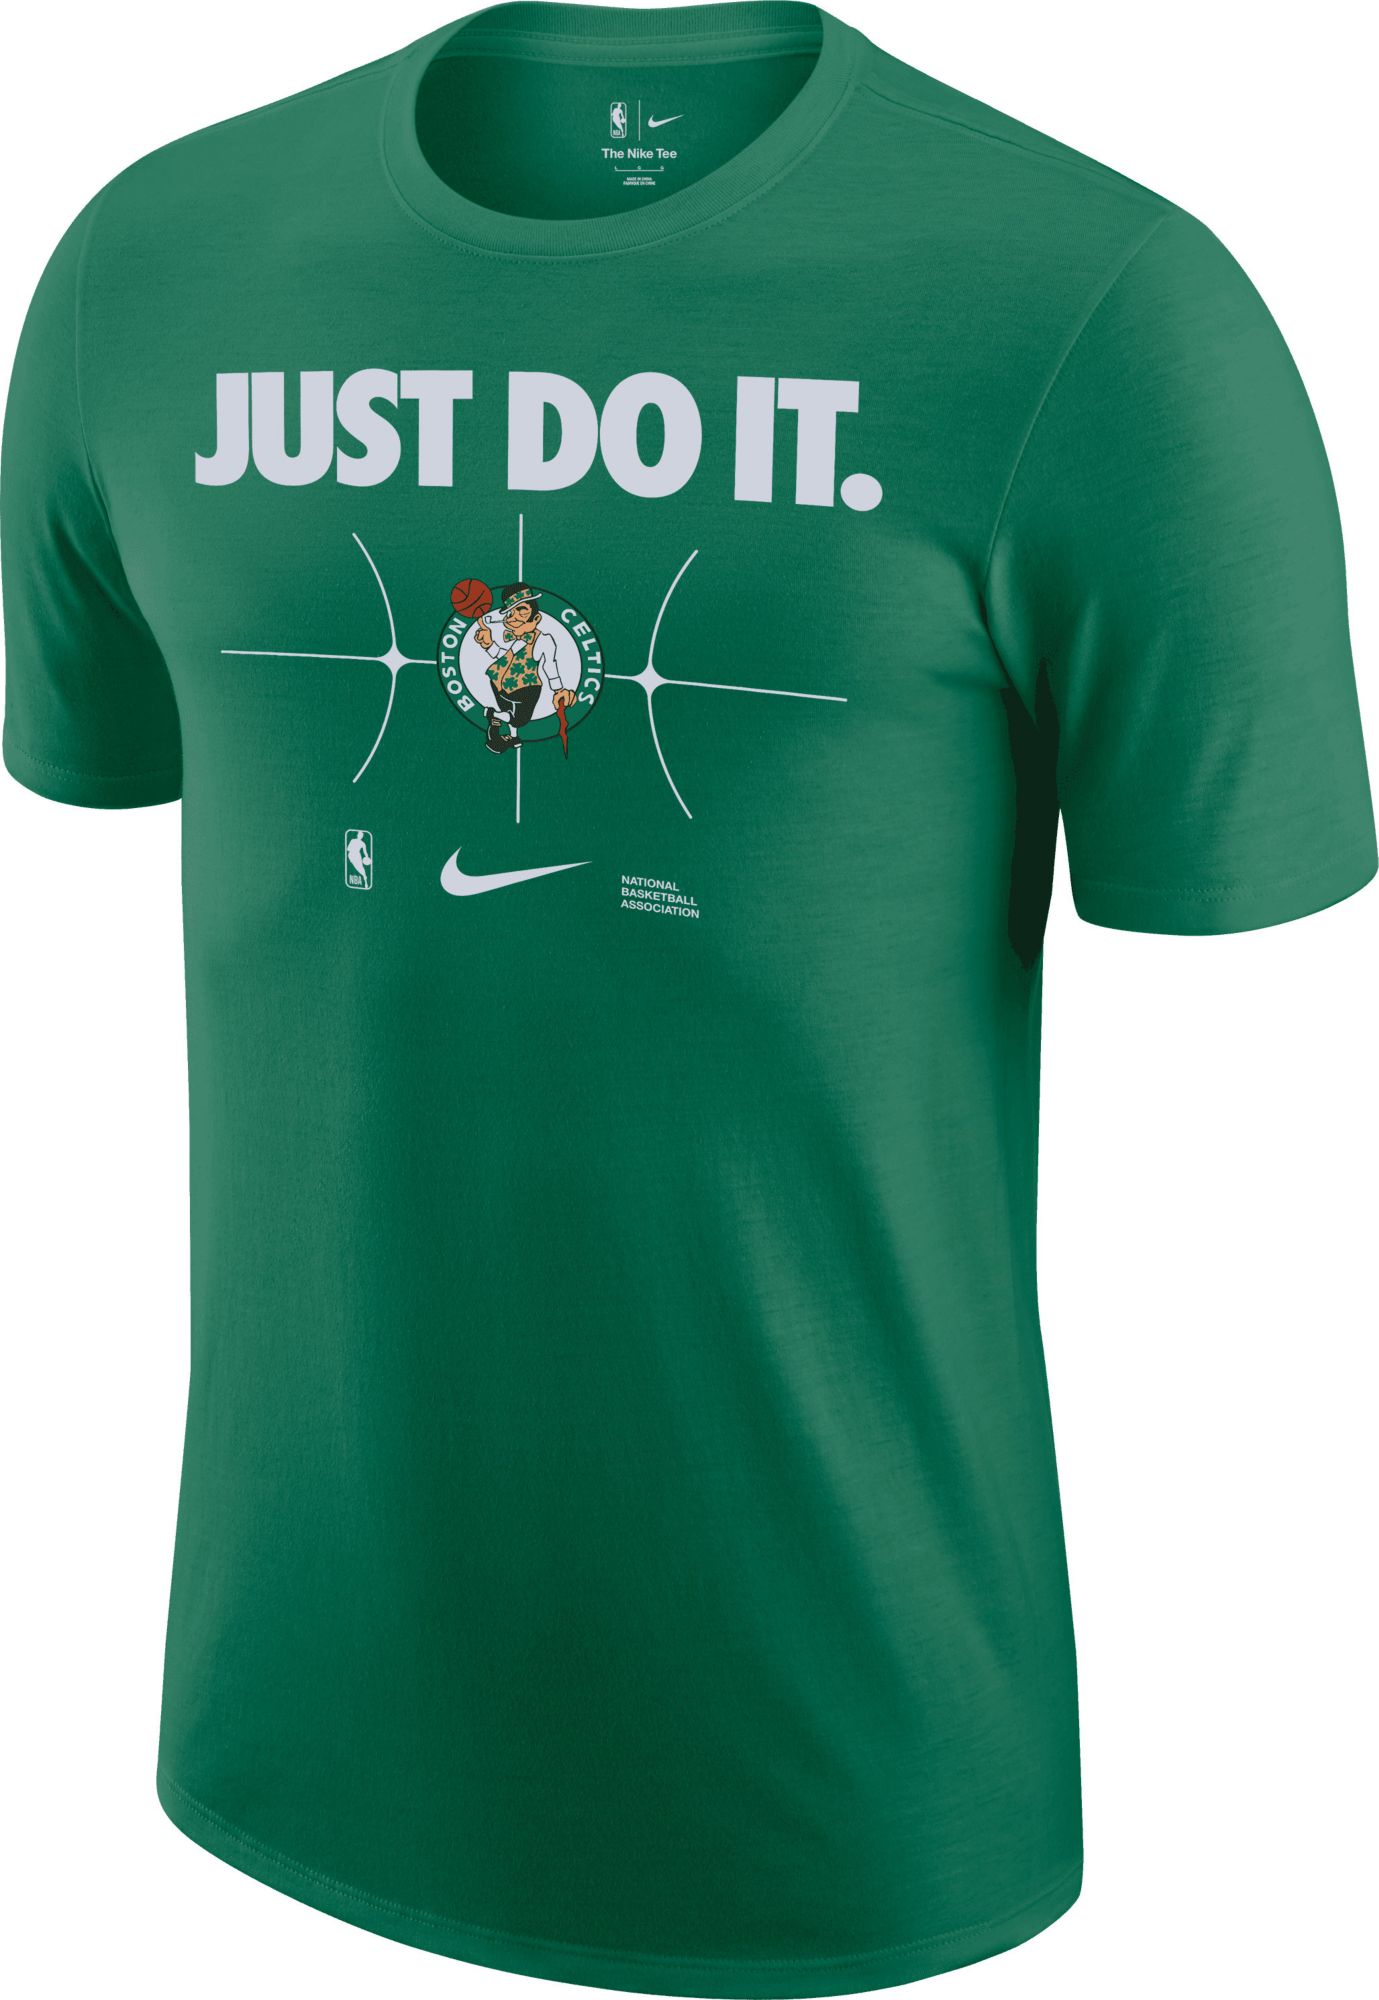 Nike Men's Boston Celtics Essential Just Do It T-Shirt